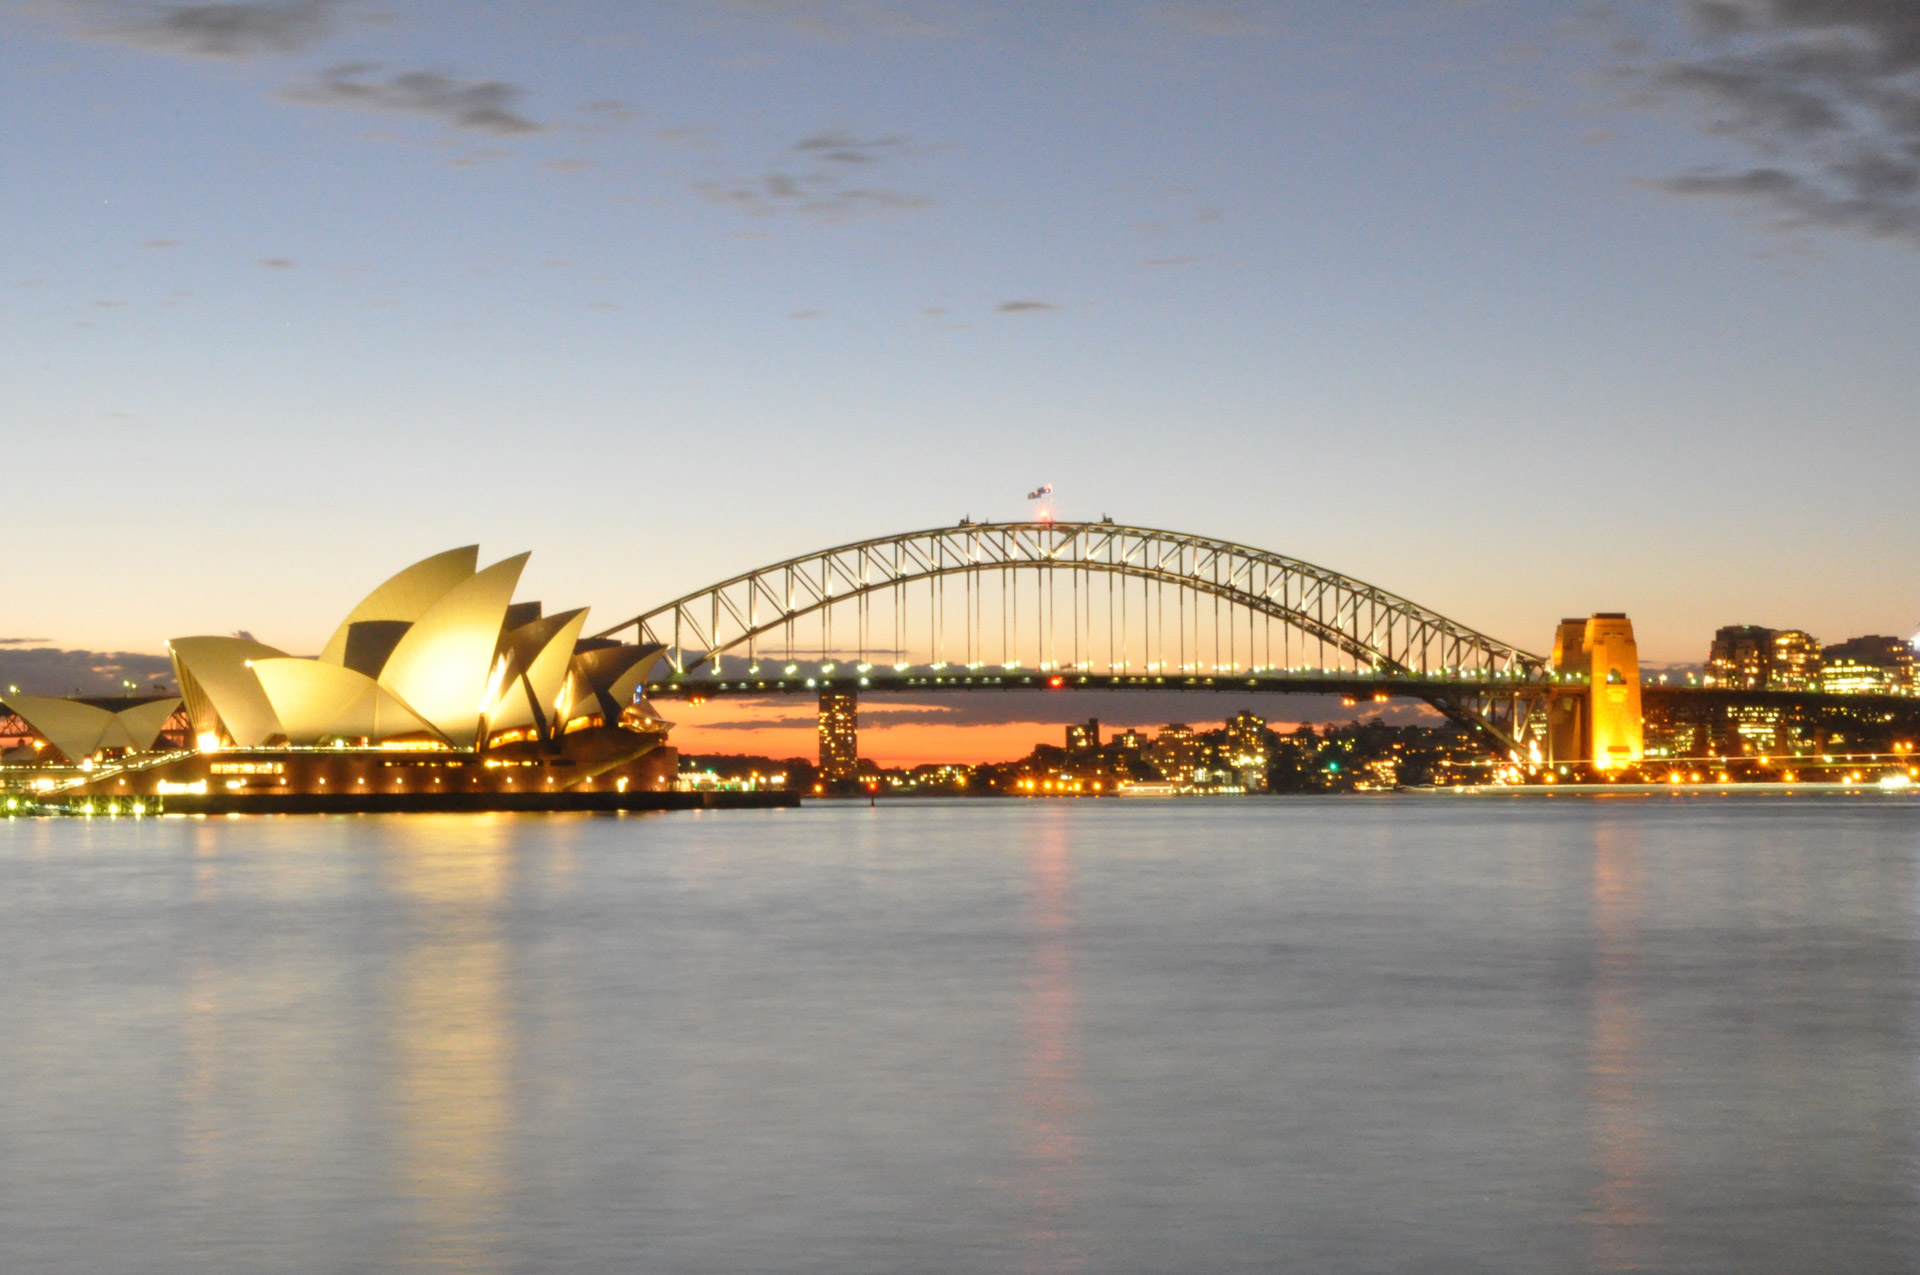 Harbour bridge. Харбор-бридж Сидней. Сиднейский мост Харбор-бридж. Мост Харбор бридж в Австралии. Сиднейский мост Харбор-бридж Строитель.